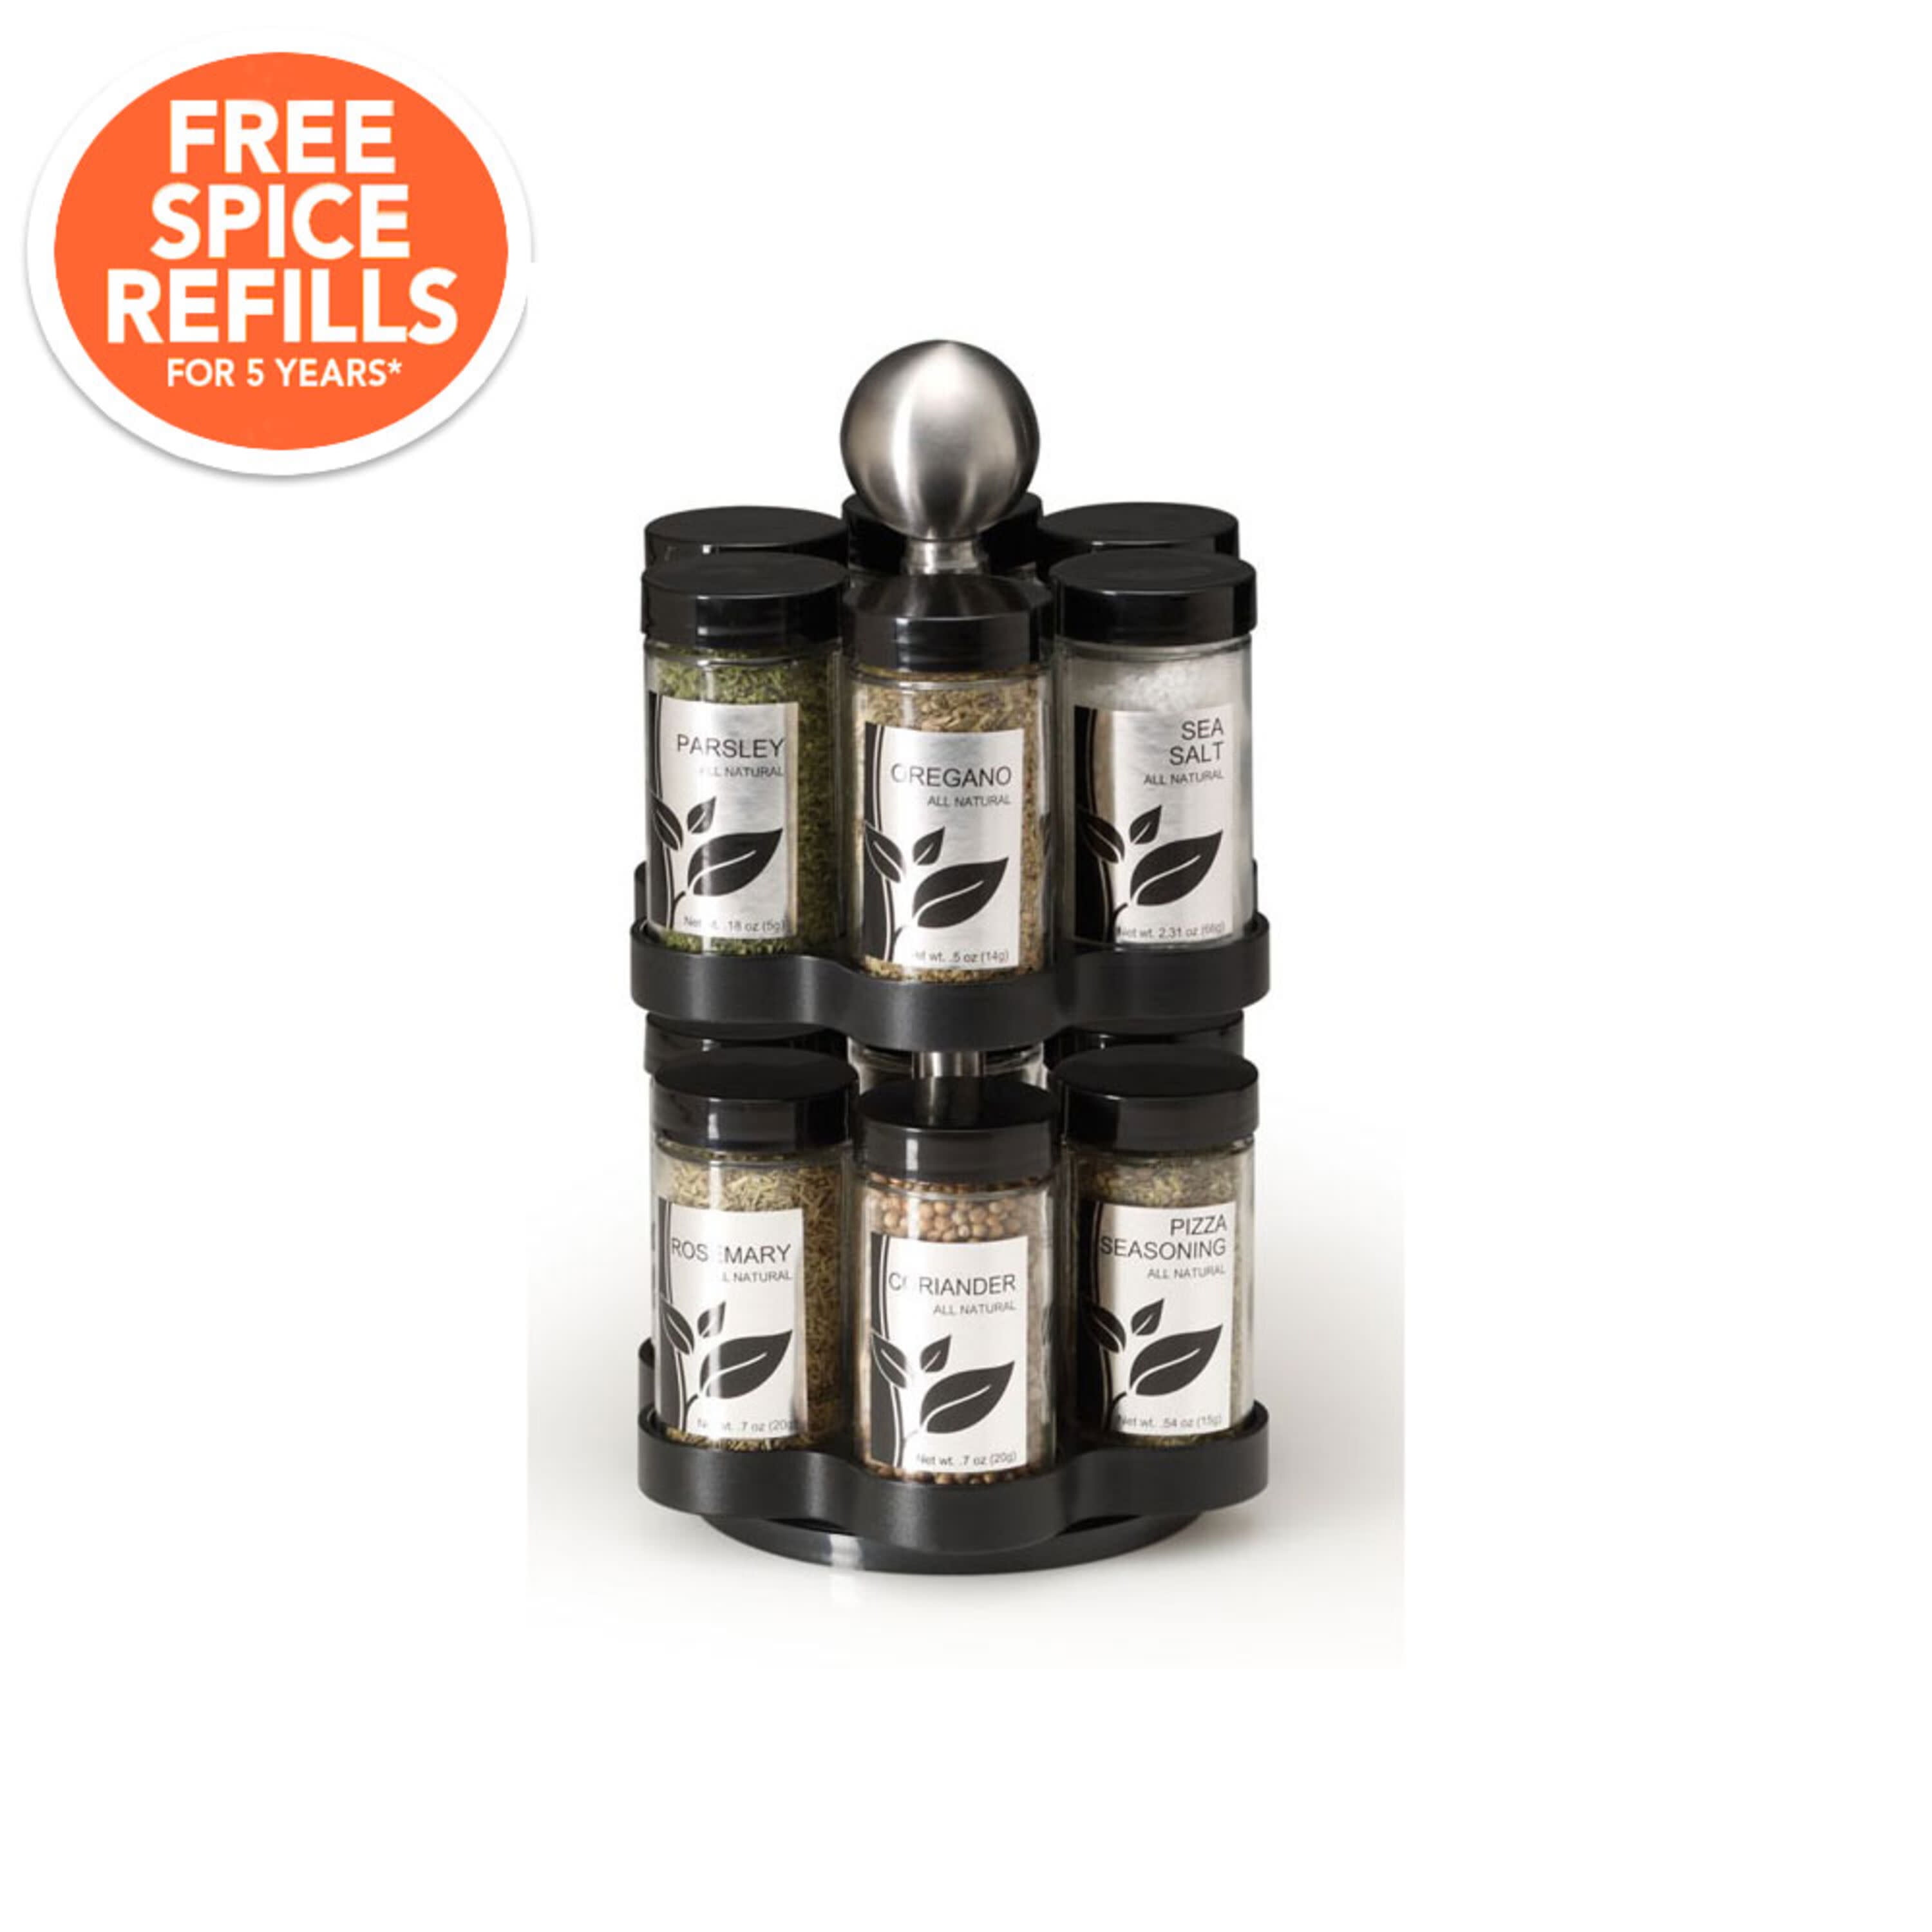 Kamenstein 5192805 Tilt 12-Jar Countertop Spice Rack Organizer with Free  Spice Refills for 5 Years